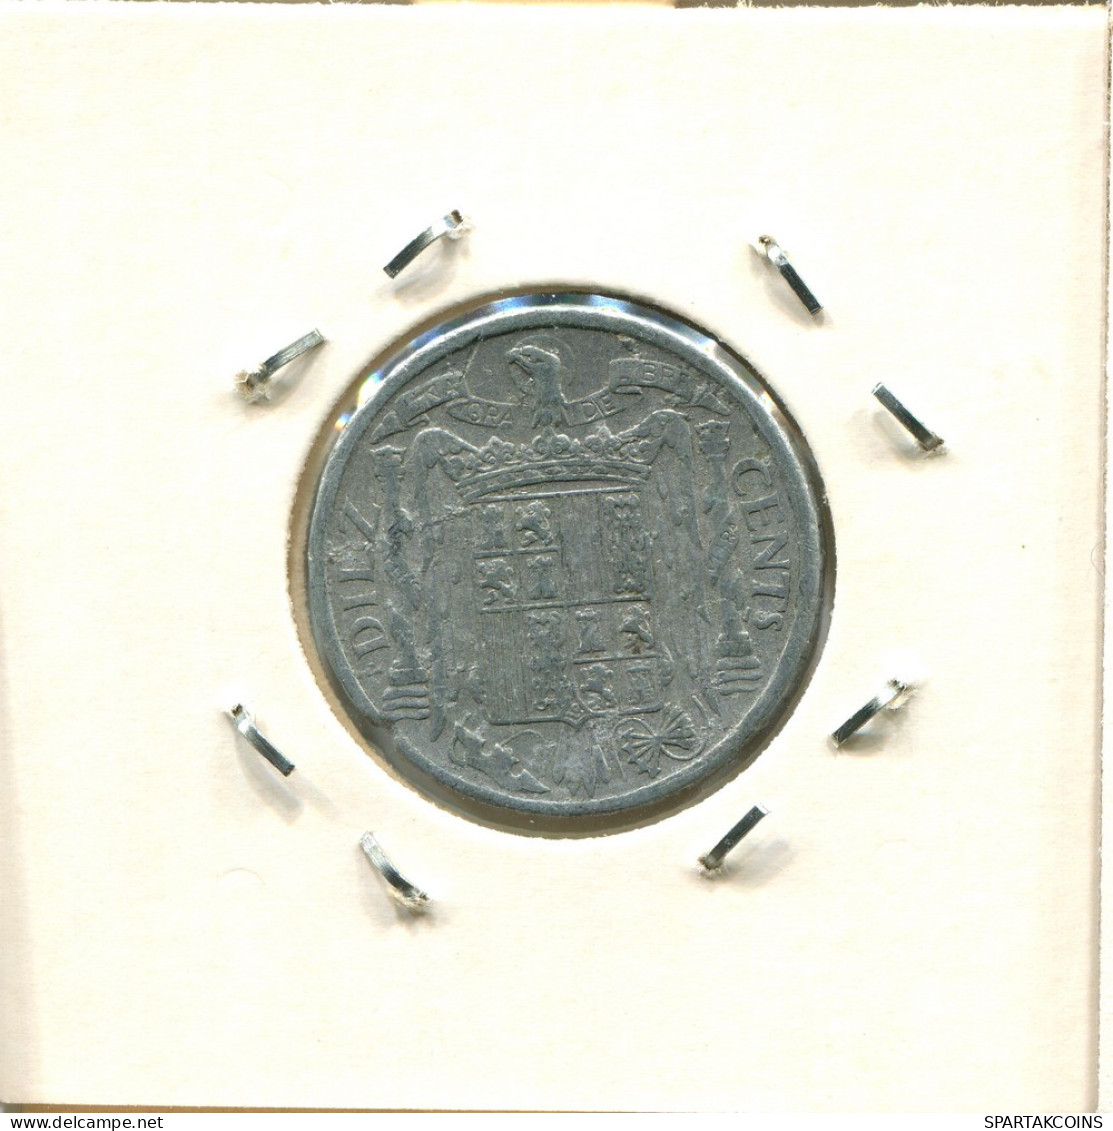 10 CENTIMOS 1941 SPAIN Coin #AZ969.U - 10 Centimos